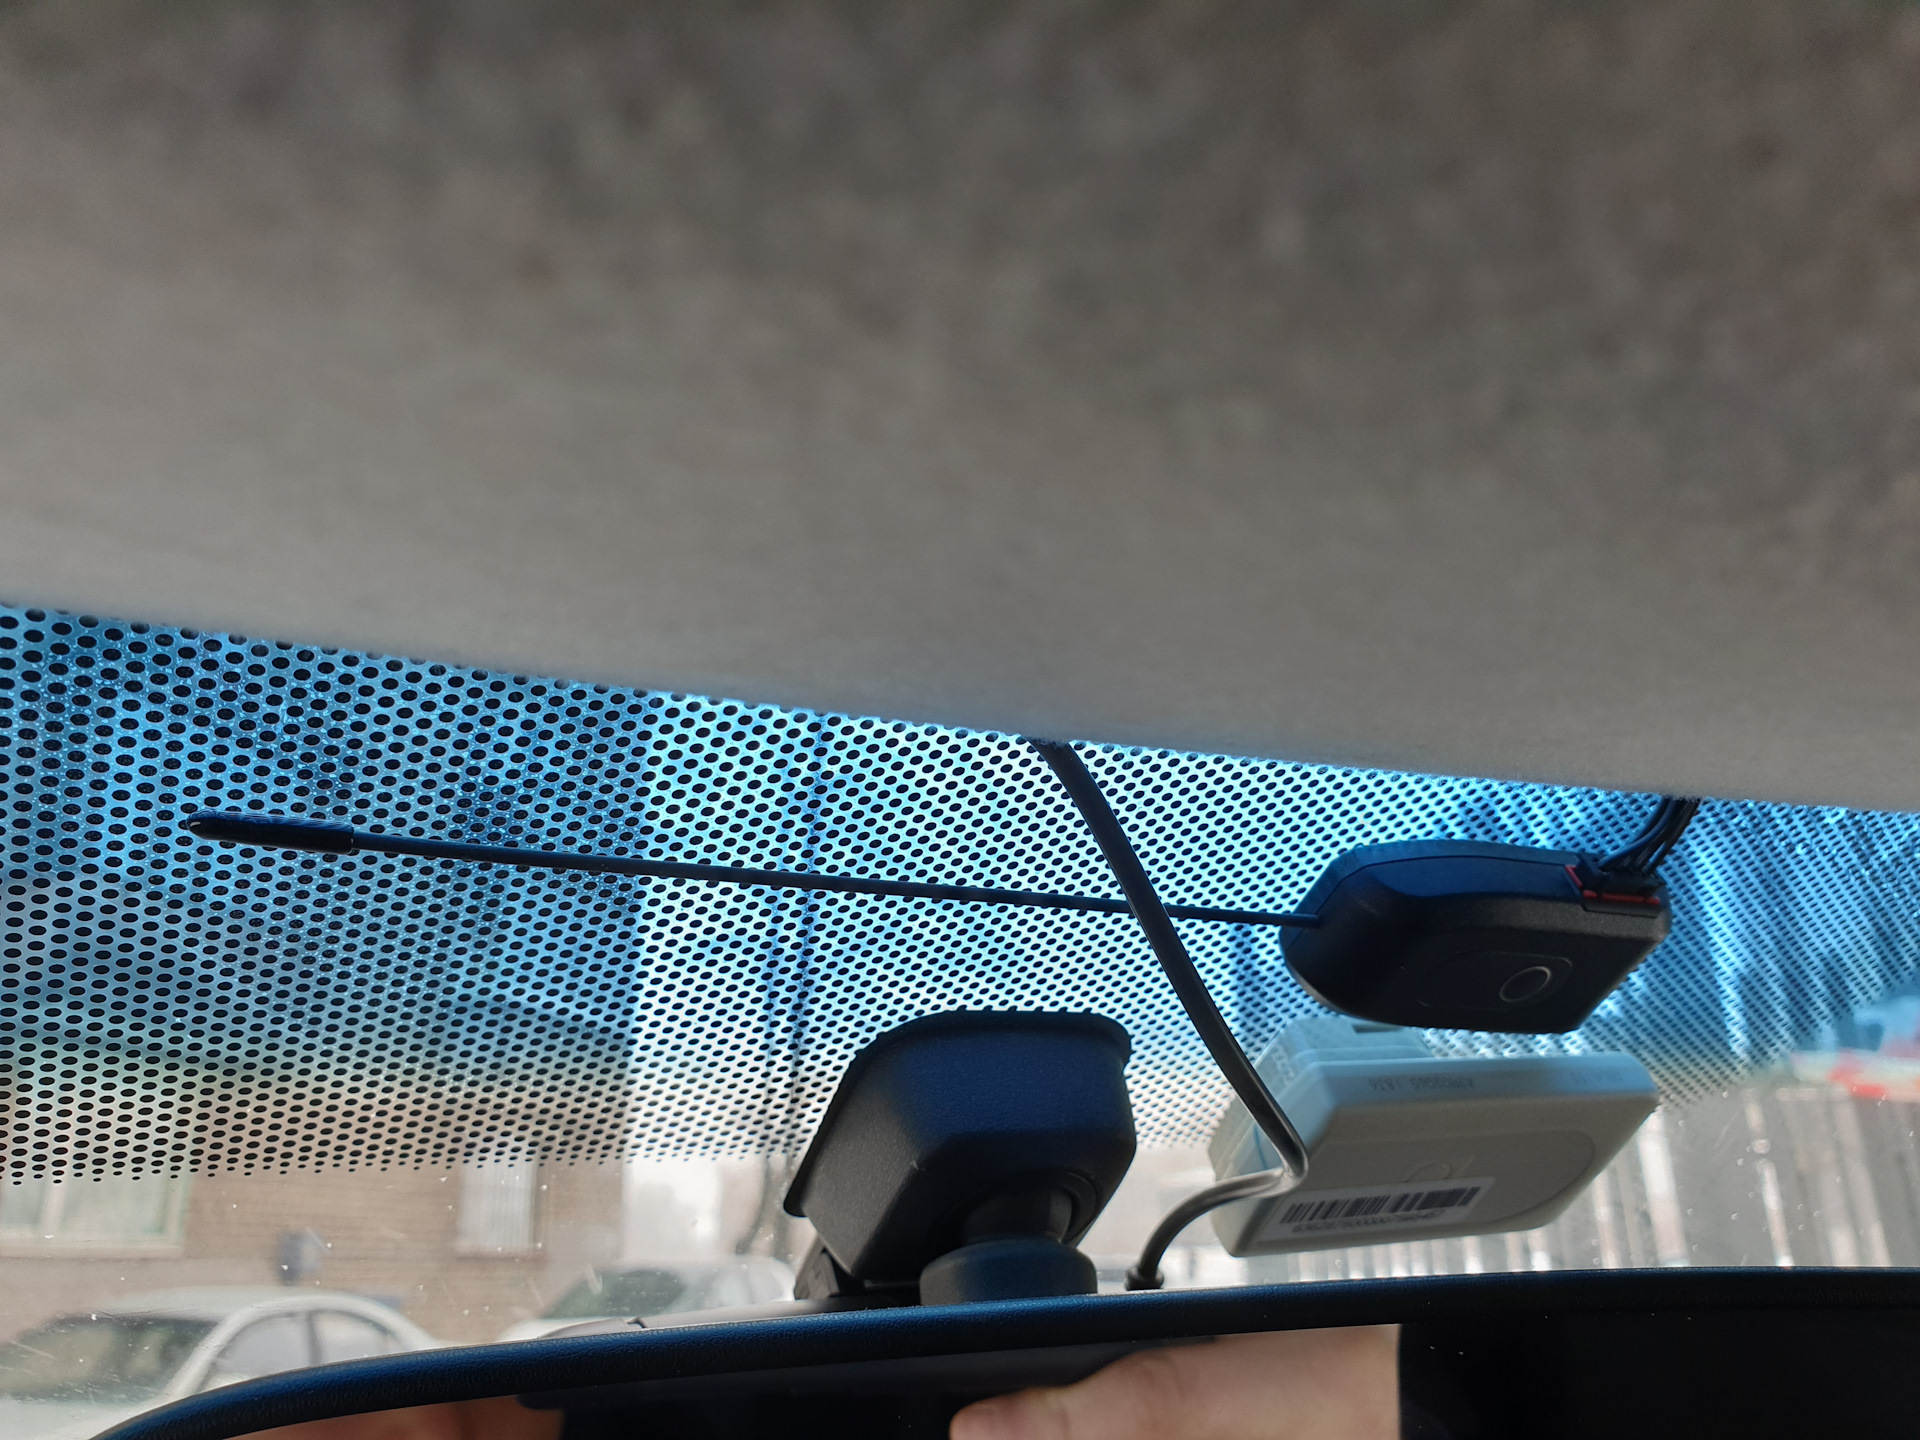 Лобовое стекло Skoda Kodiaq. На лобовом стекле антенна сигнализации старлайн а 93. Обогрев заднего стекла шкода